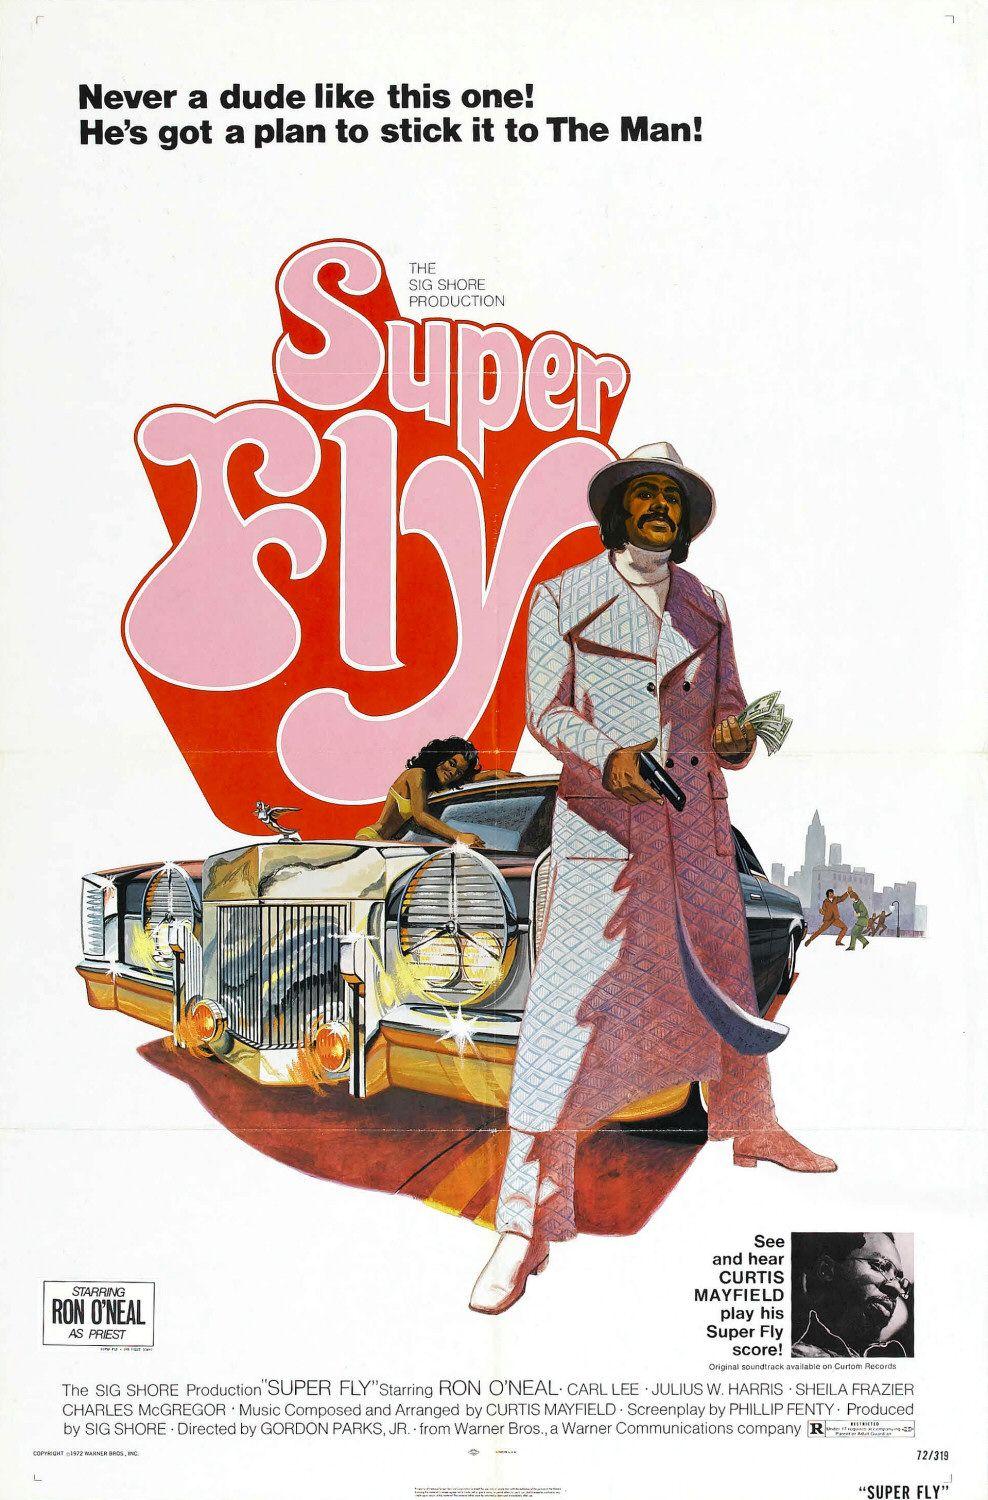 35mm screening of amazing 70's original SUPERFLY